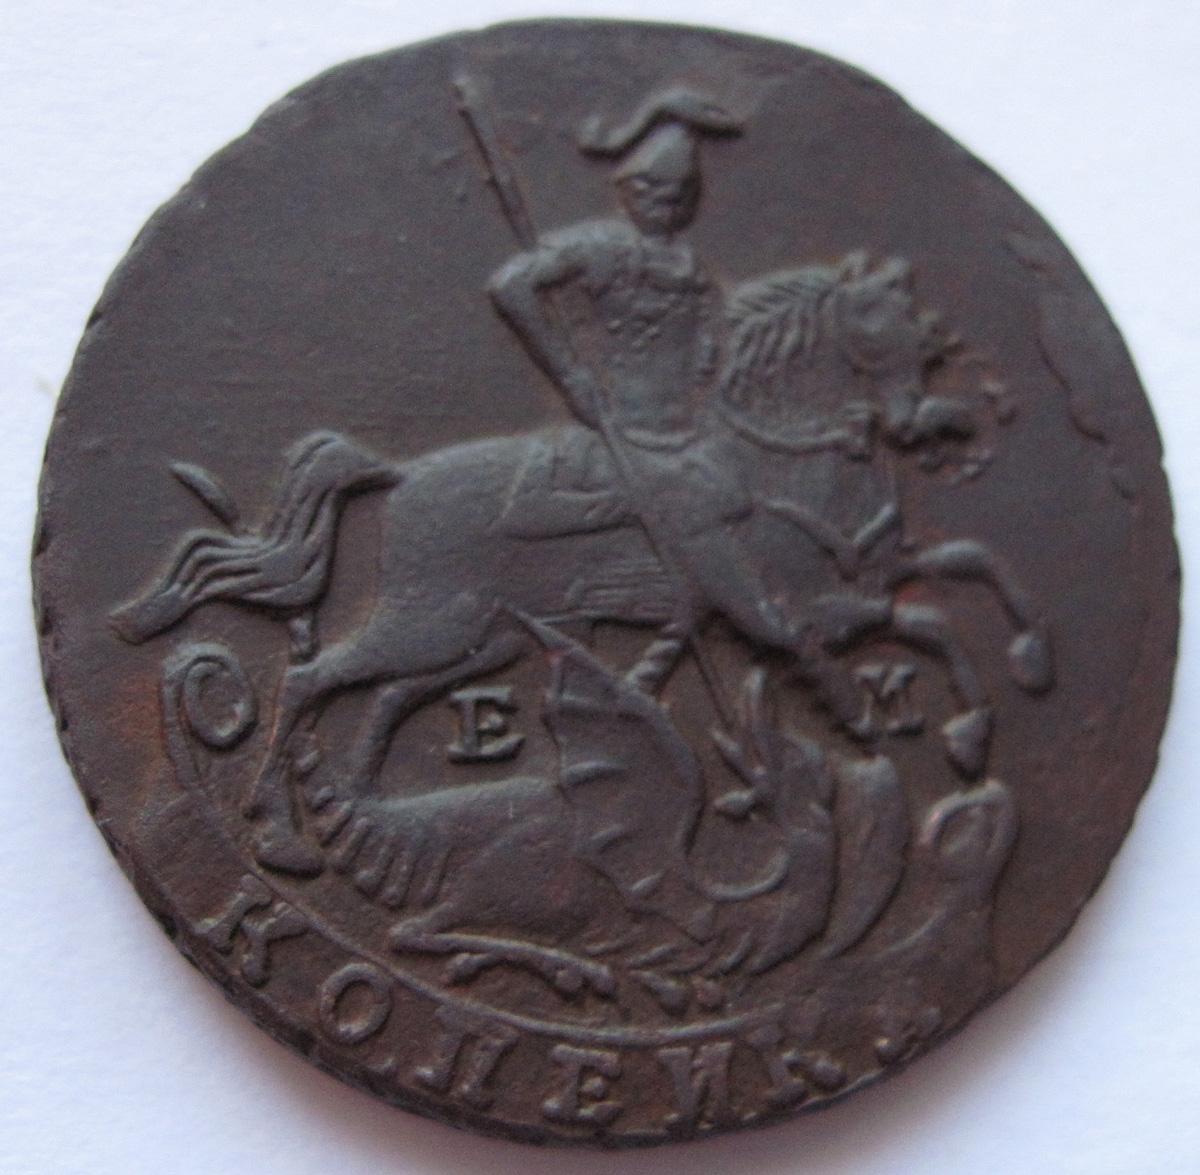 Монеты 1700 цены. Медные монеты 1700-1800 года. Монета  гривен 1700-1800 год. Монеты 1700г.